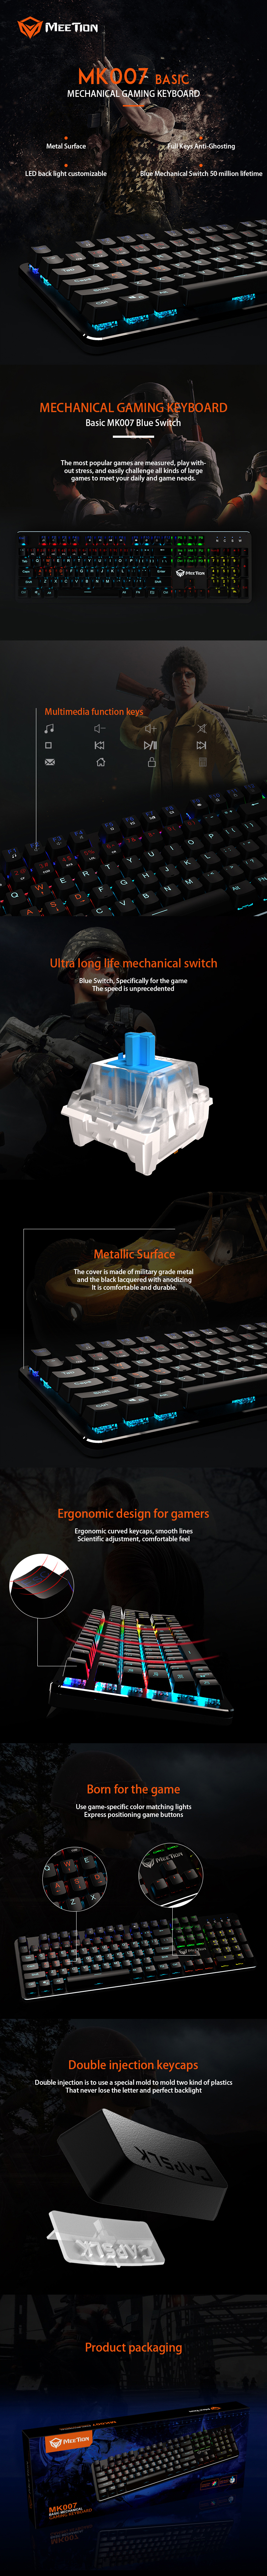 Meetion best mechanical keyboard company